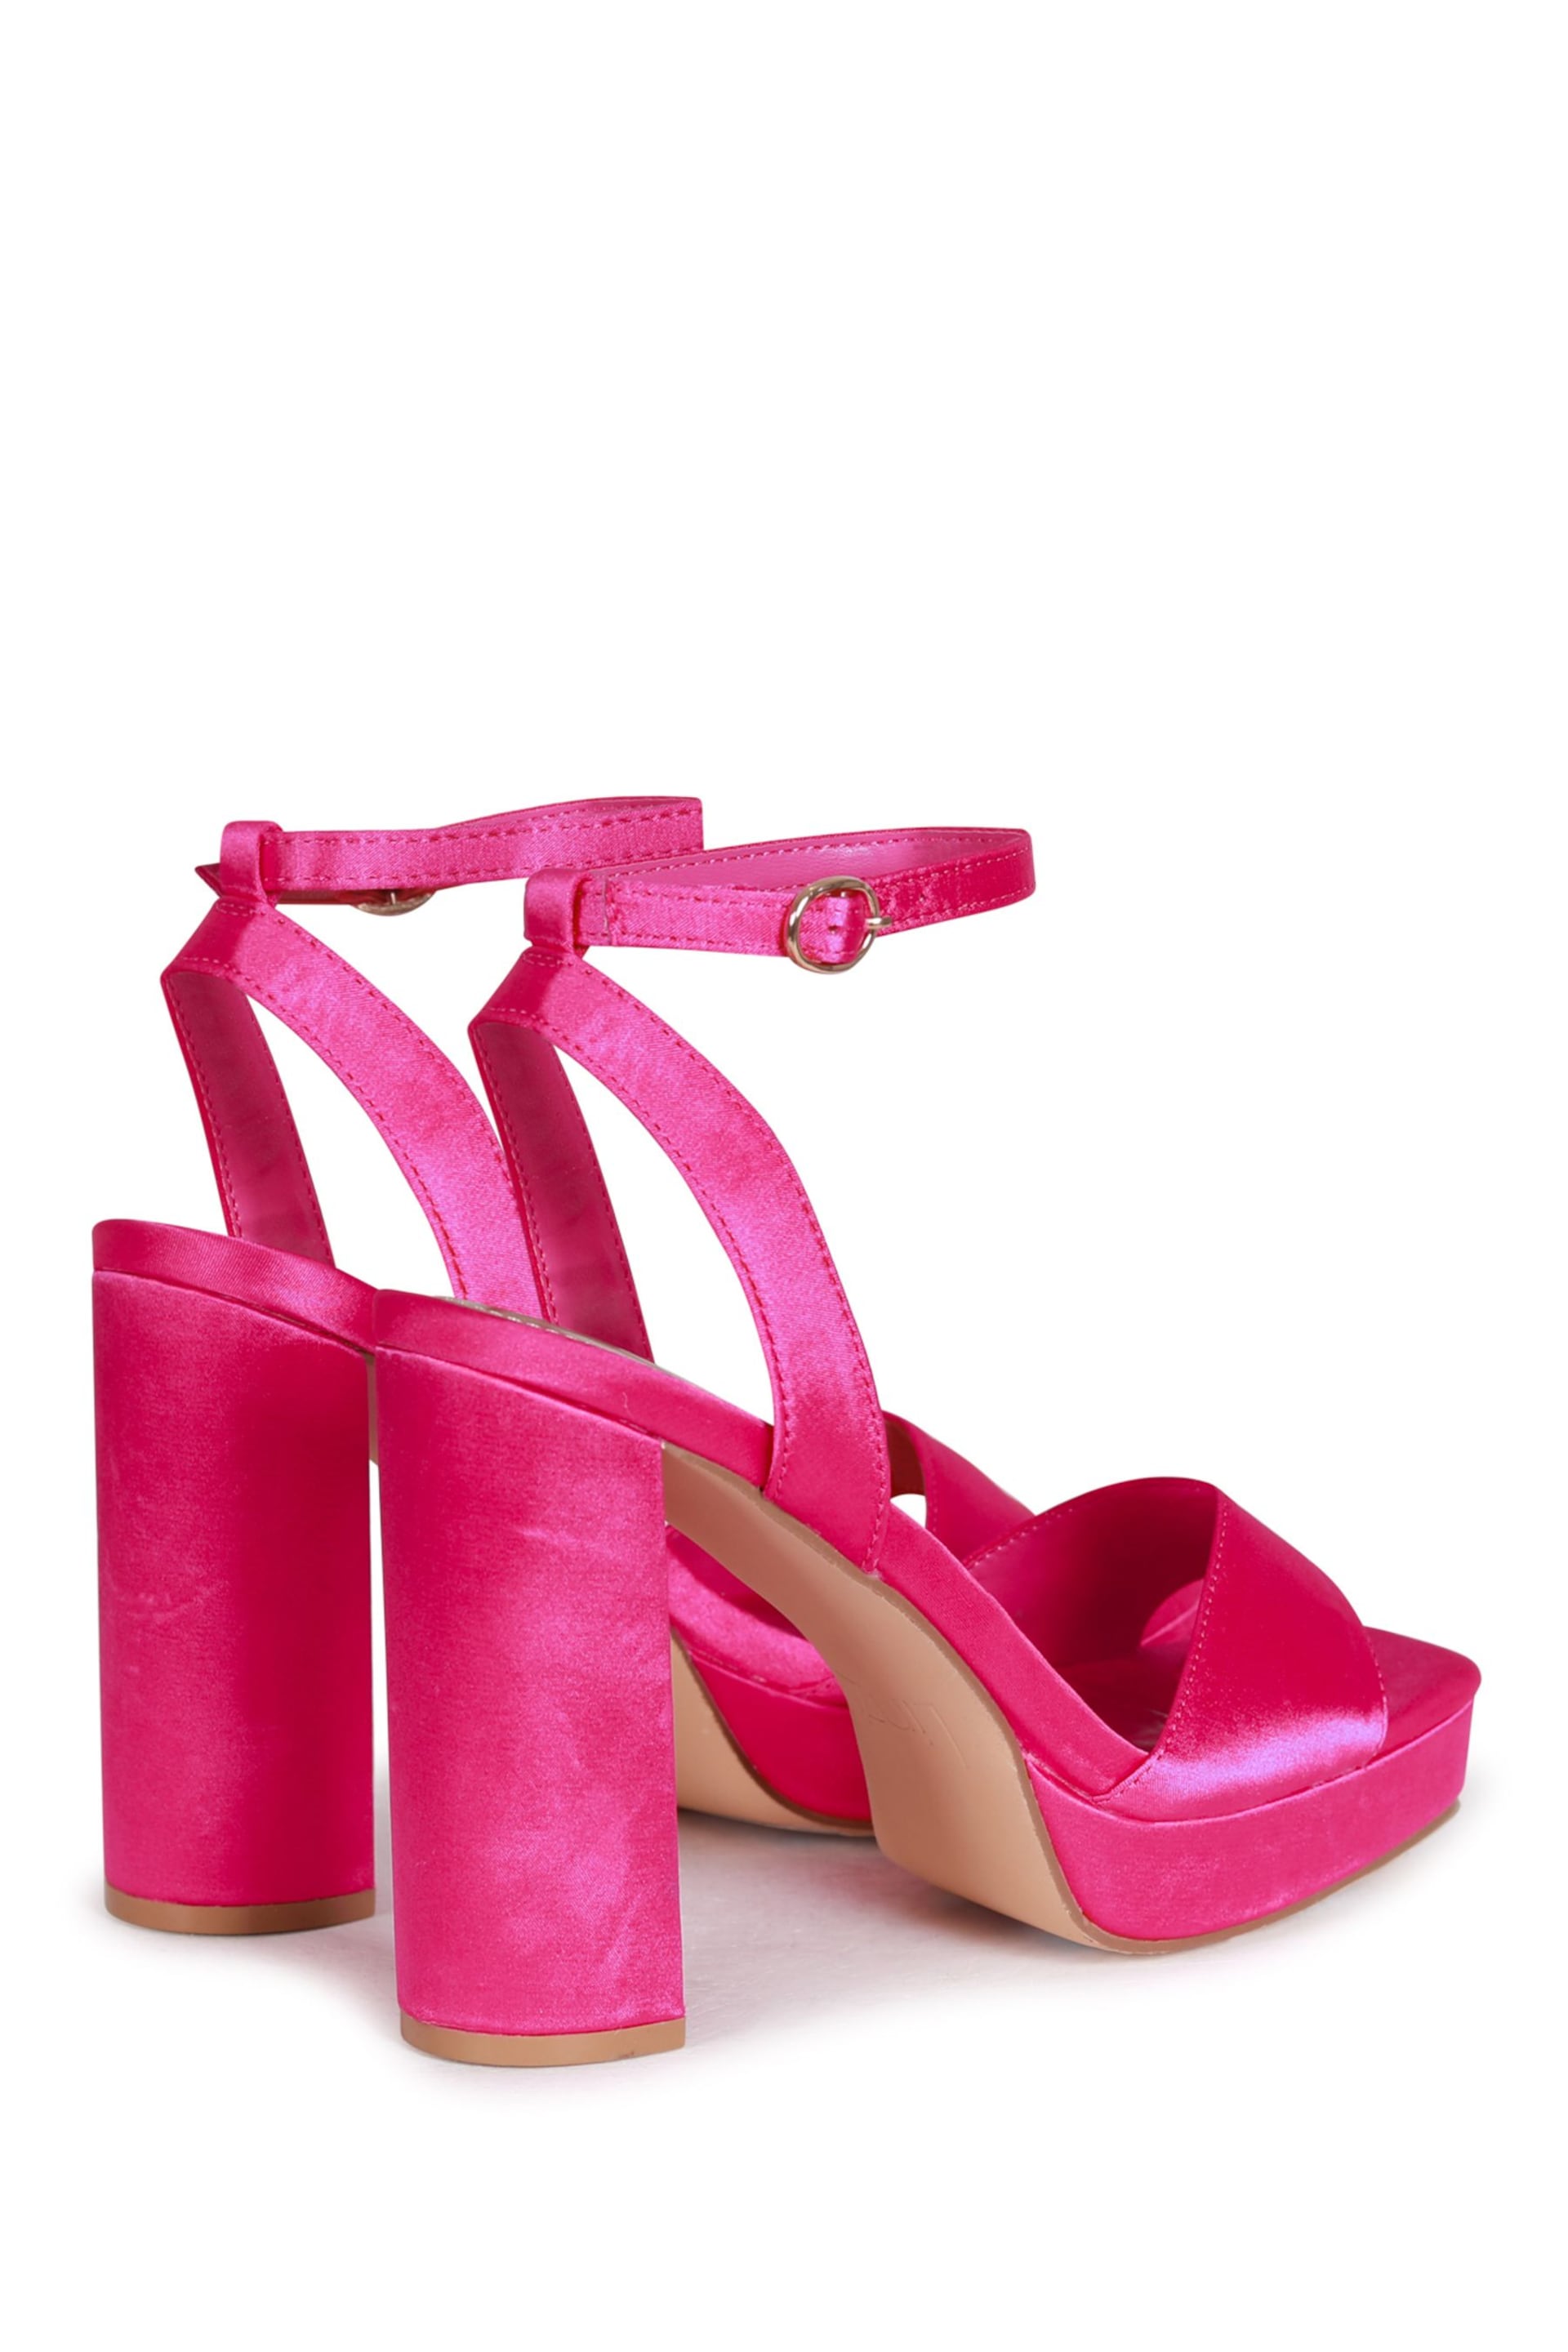 Linzi Pink Fuchsia Satin Gloria Platform Heeled Sandal With Wrap Around Ankle Strap - Image 4 of 4